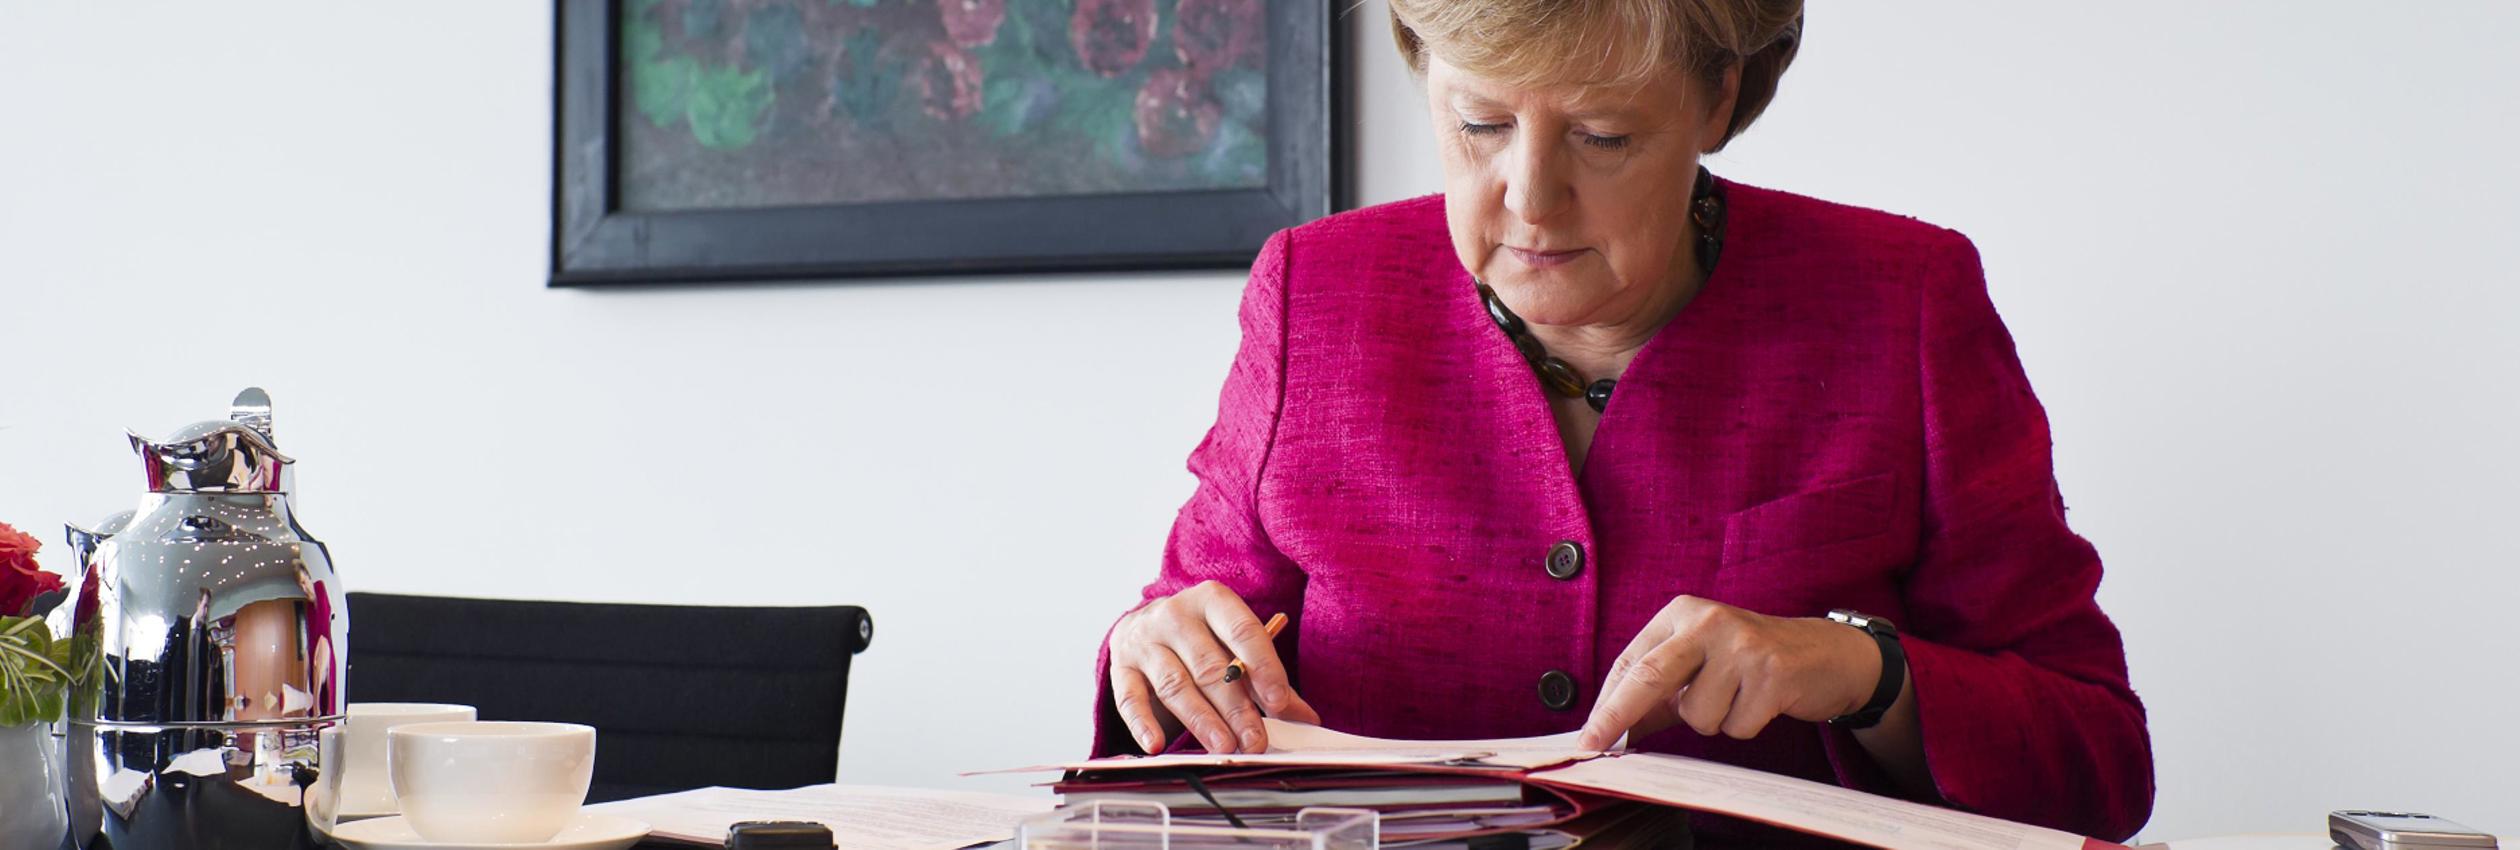 Angela Merkel, Former Chancellor of Germany